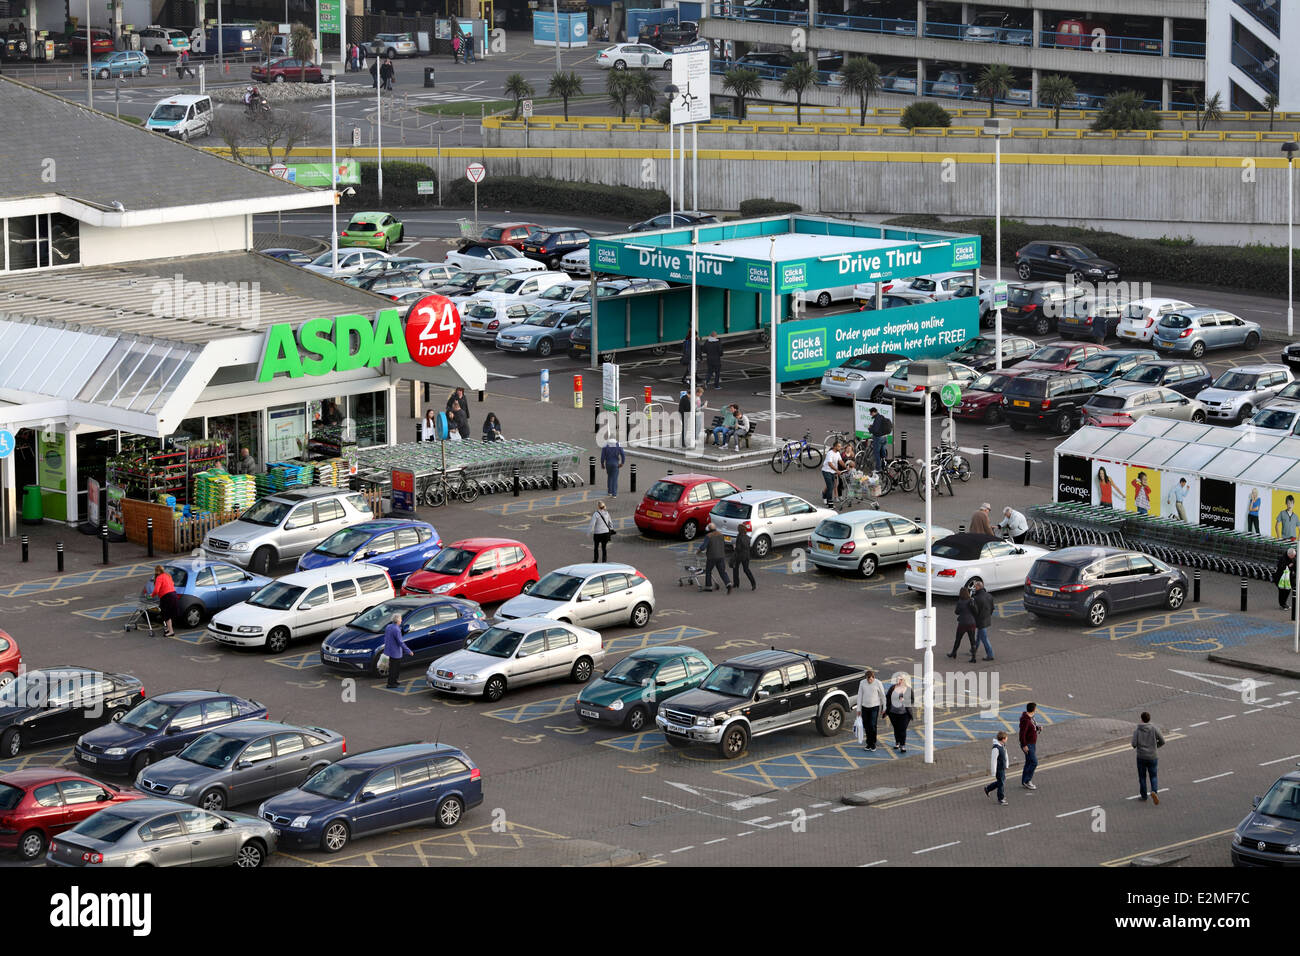 The entrance to Asda supermarket, Brighton Marina. Drive Thru “Click and Collect” area to the right. Stock Photo